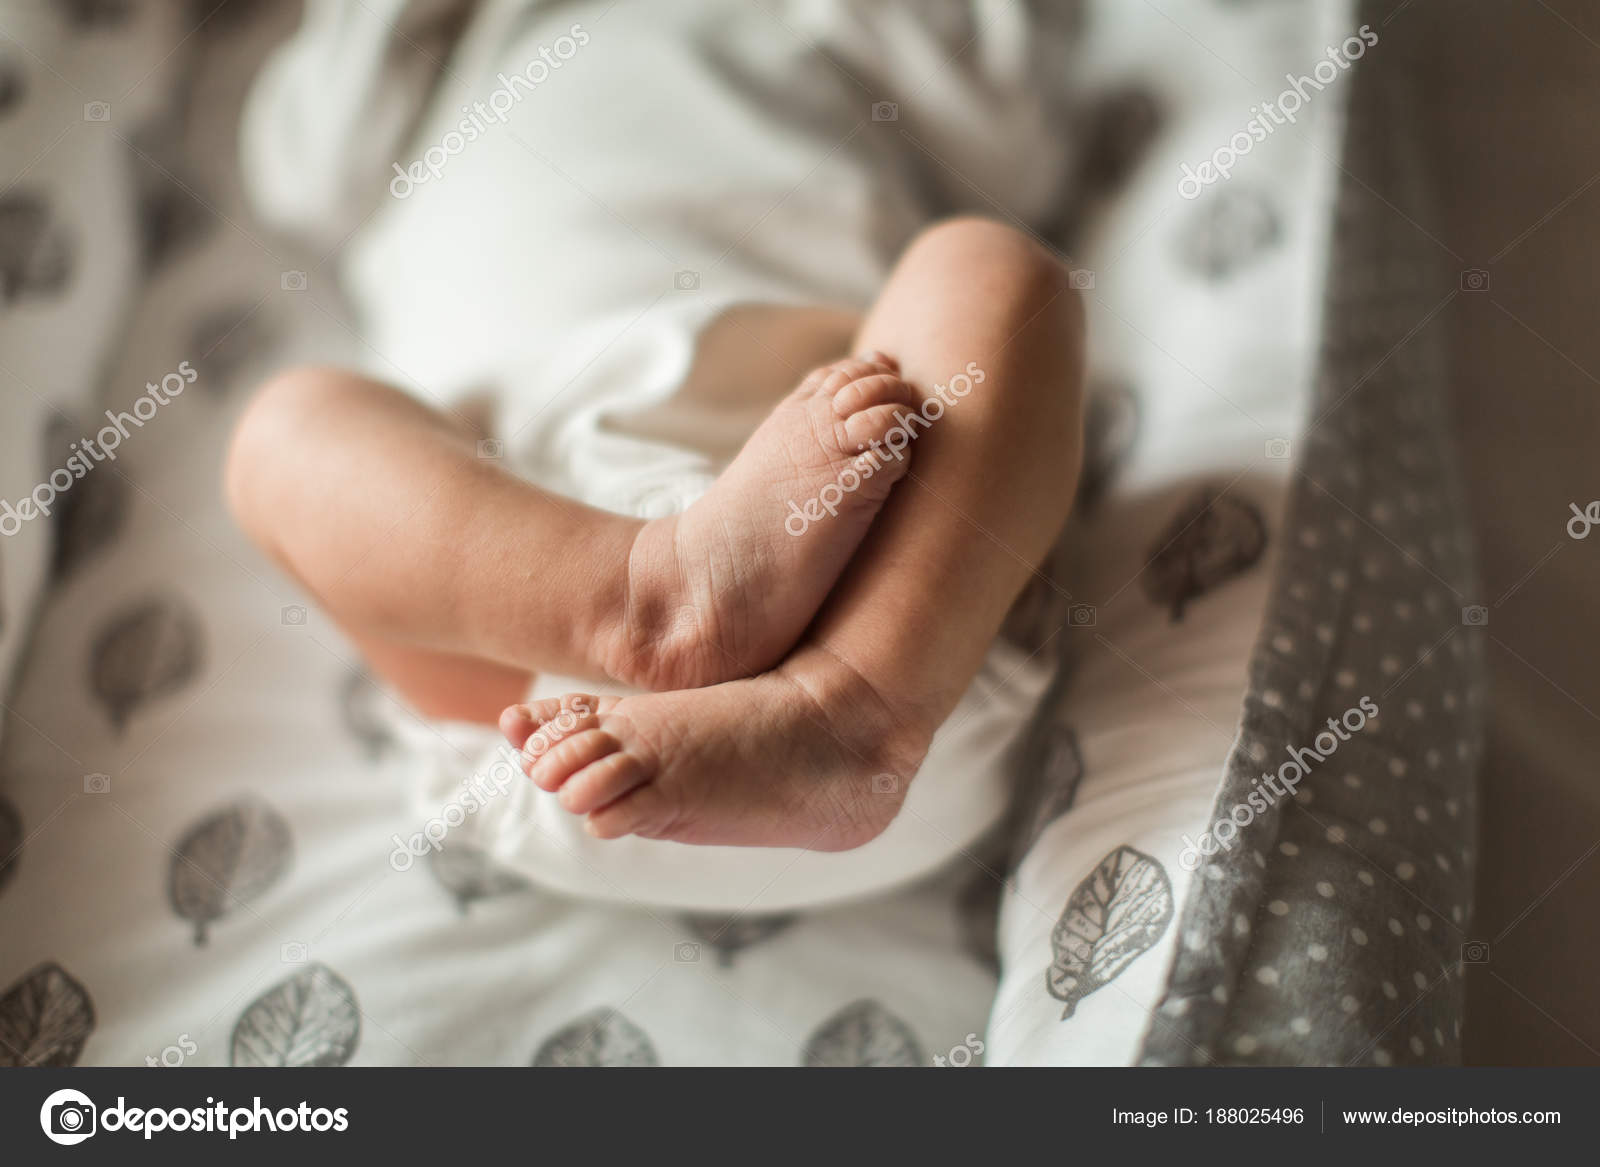 depositphotos_188025496-stock-photo-baby-legs-small-legs-of